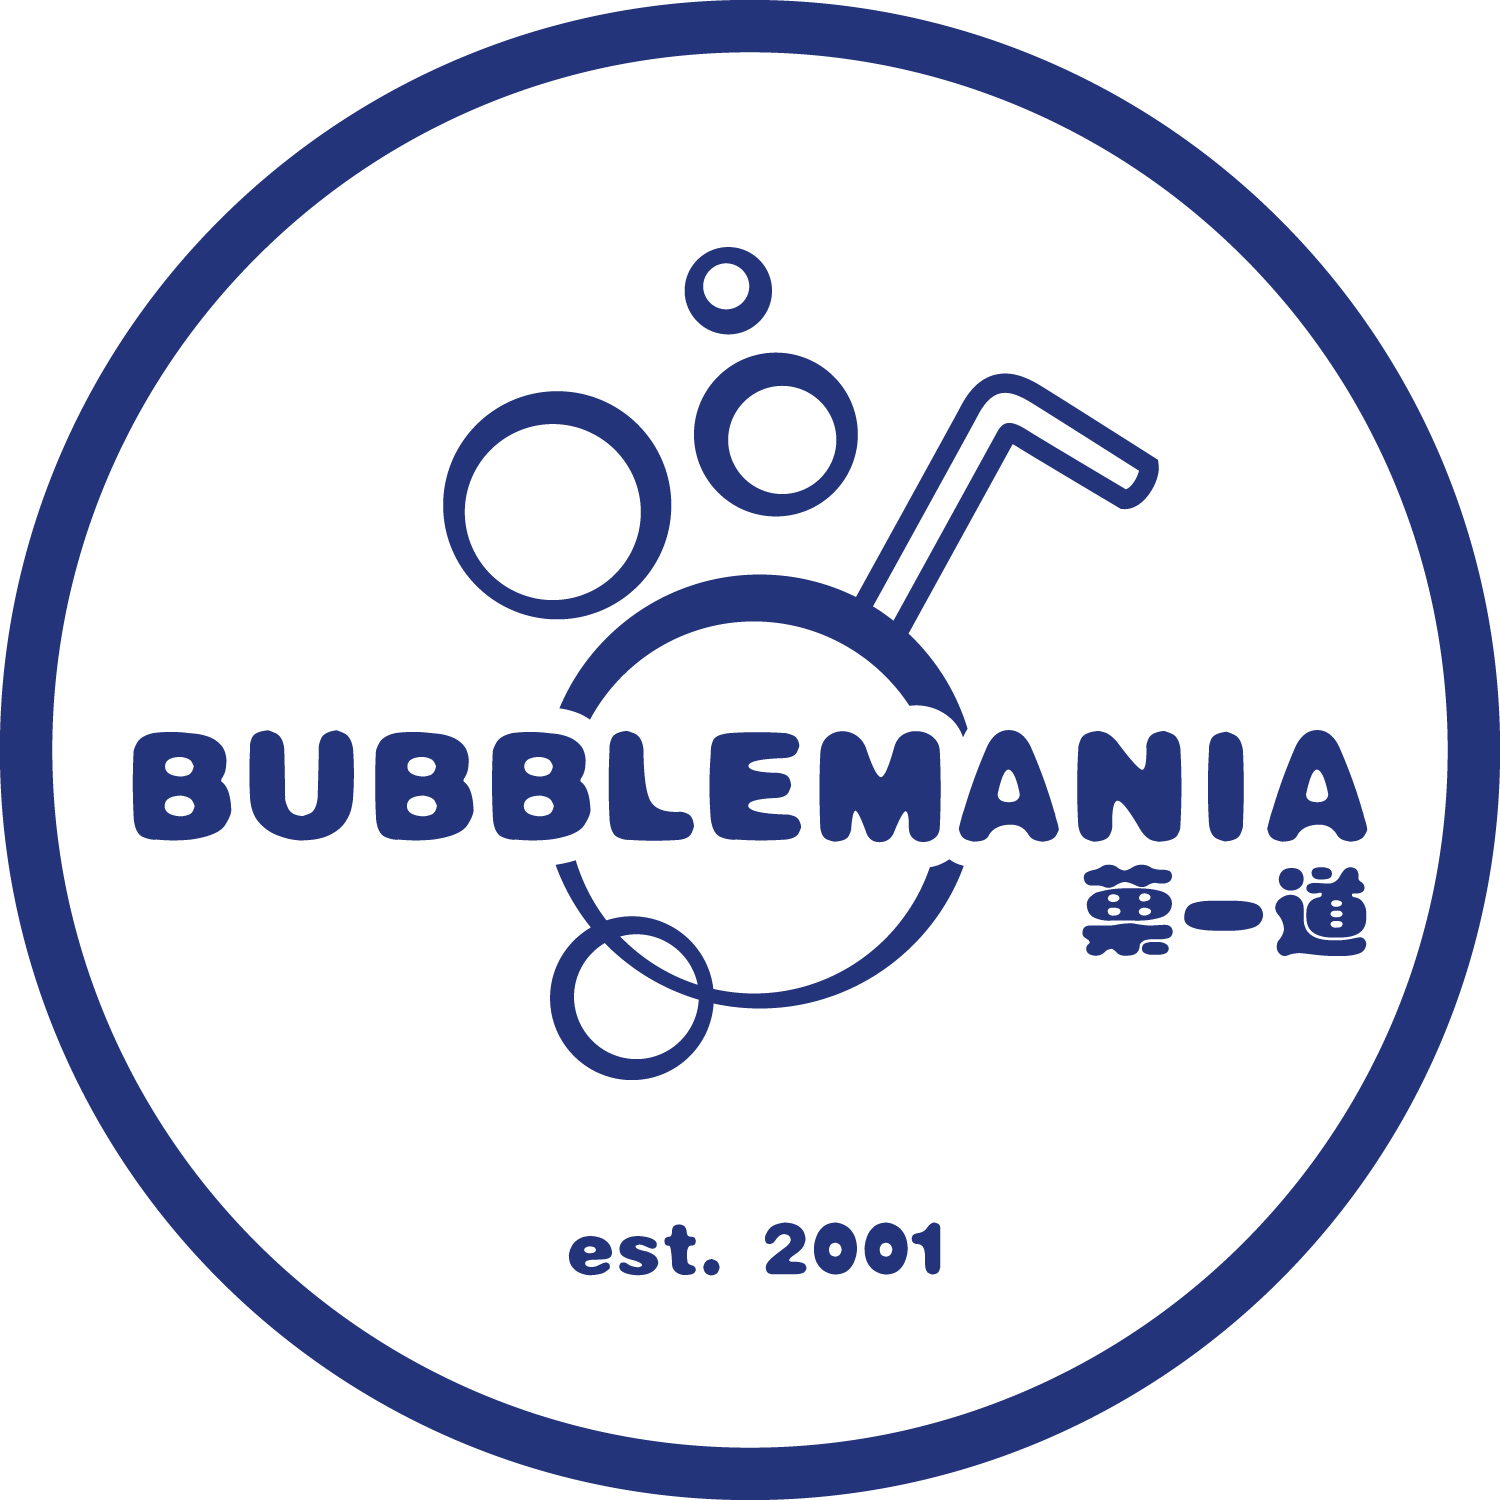 Bubblemania Cafe